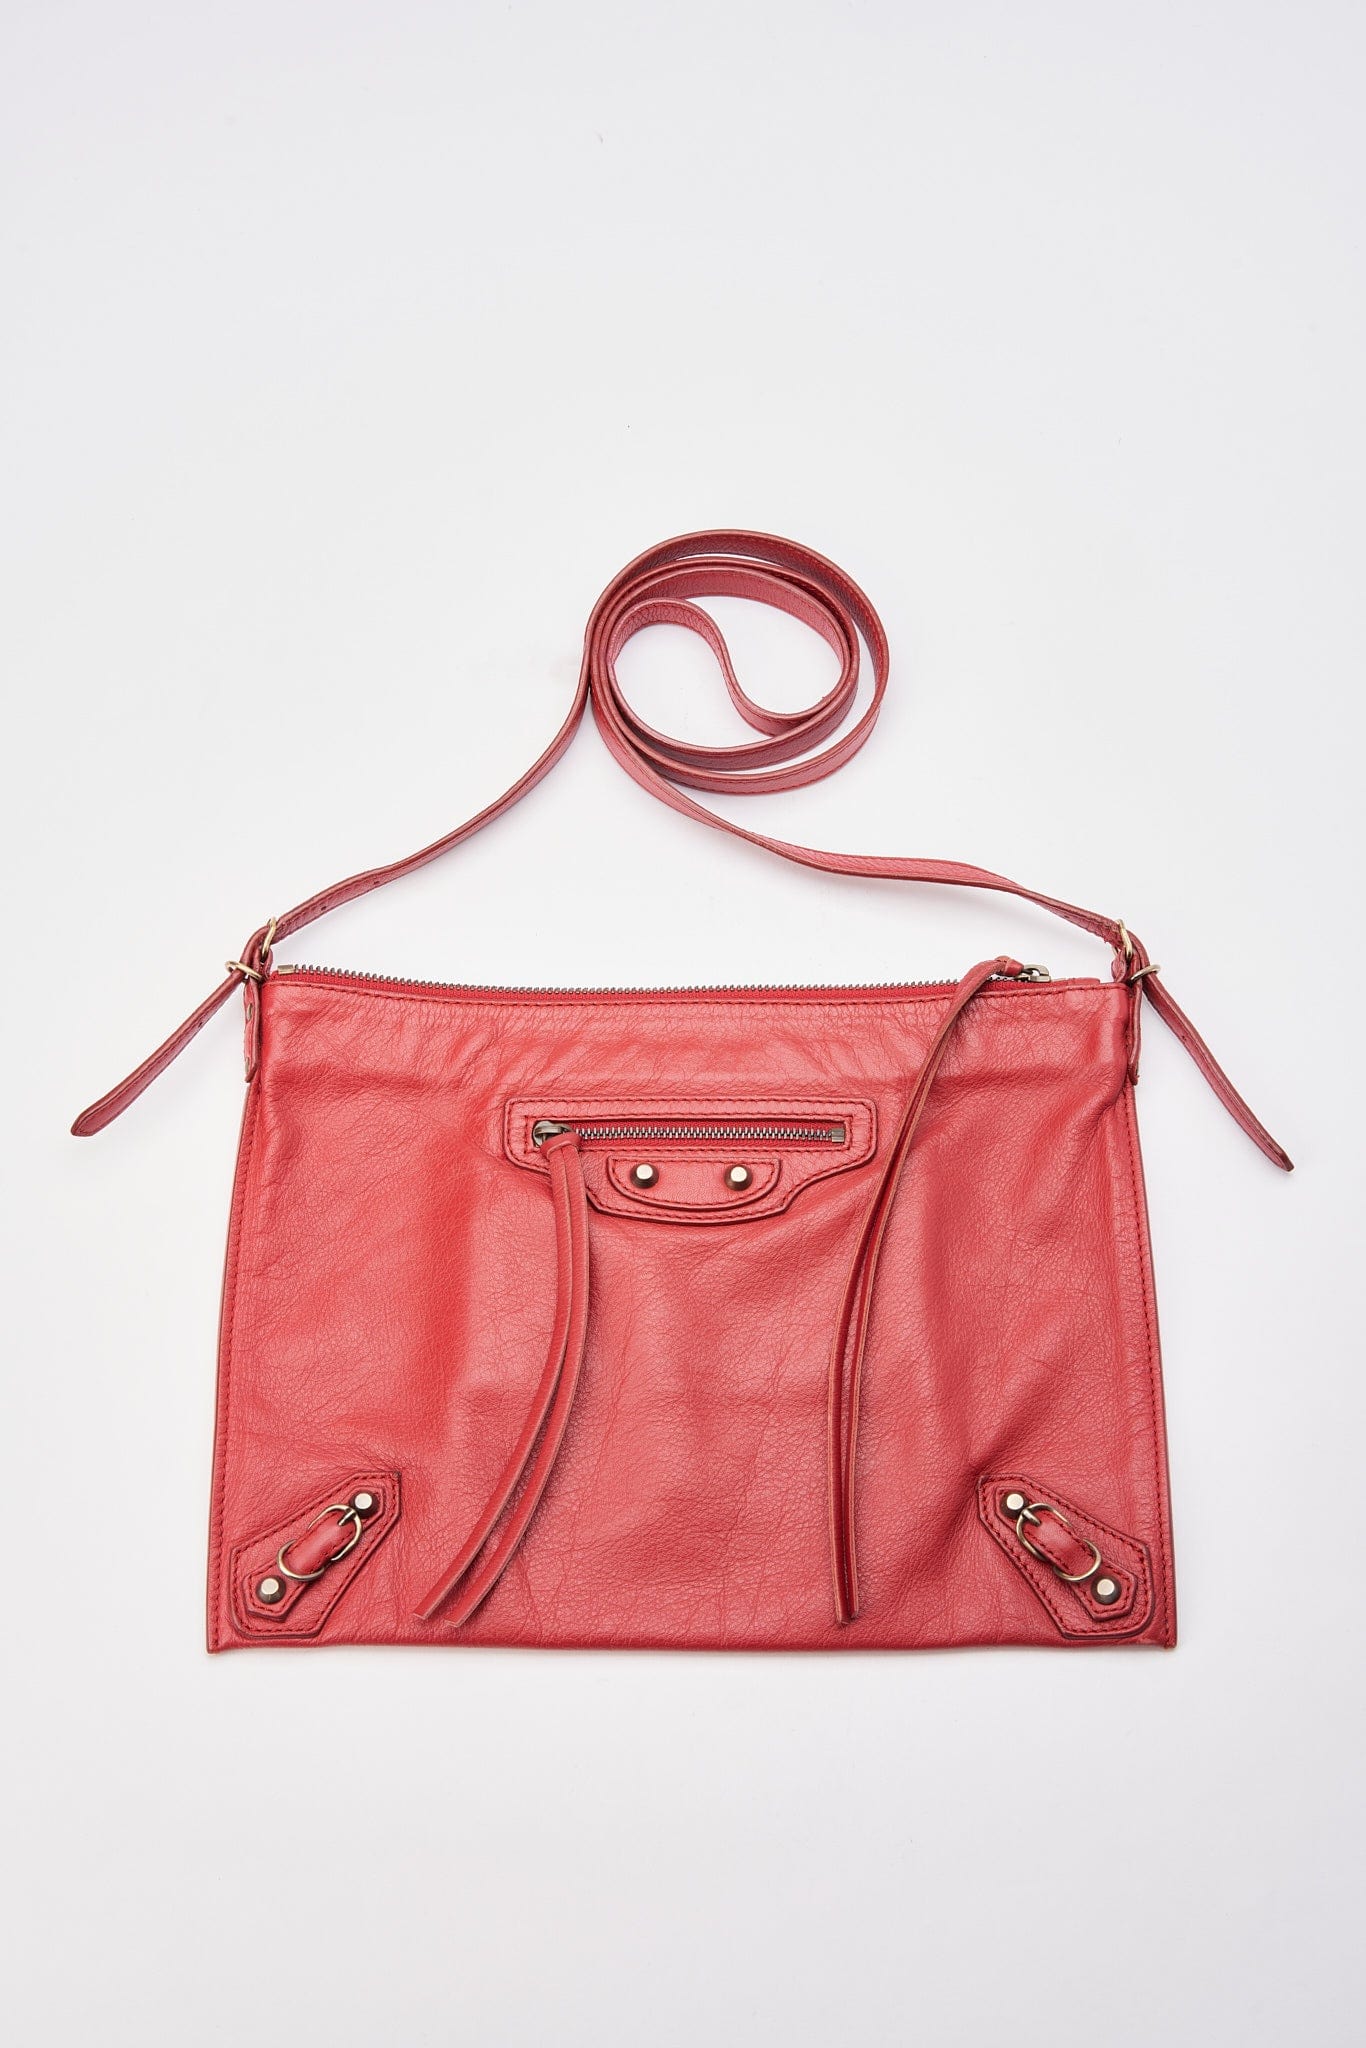 Balenciaga Red Leather City Crossbody Bag